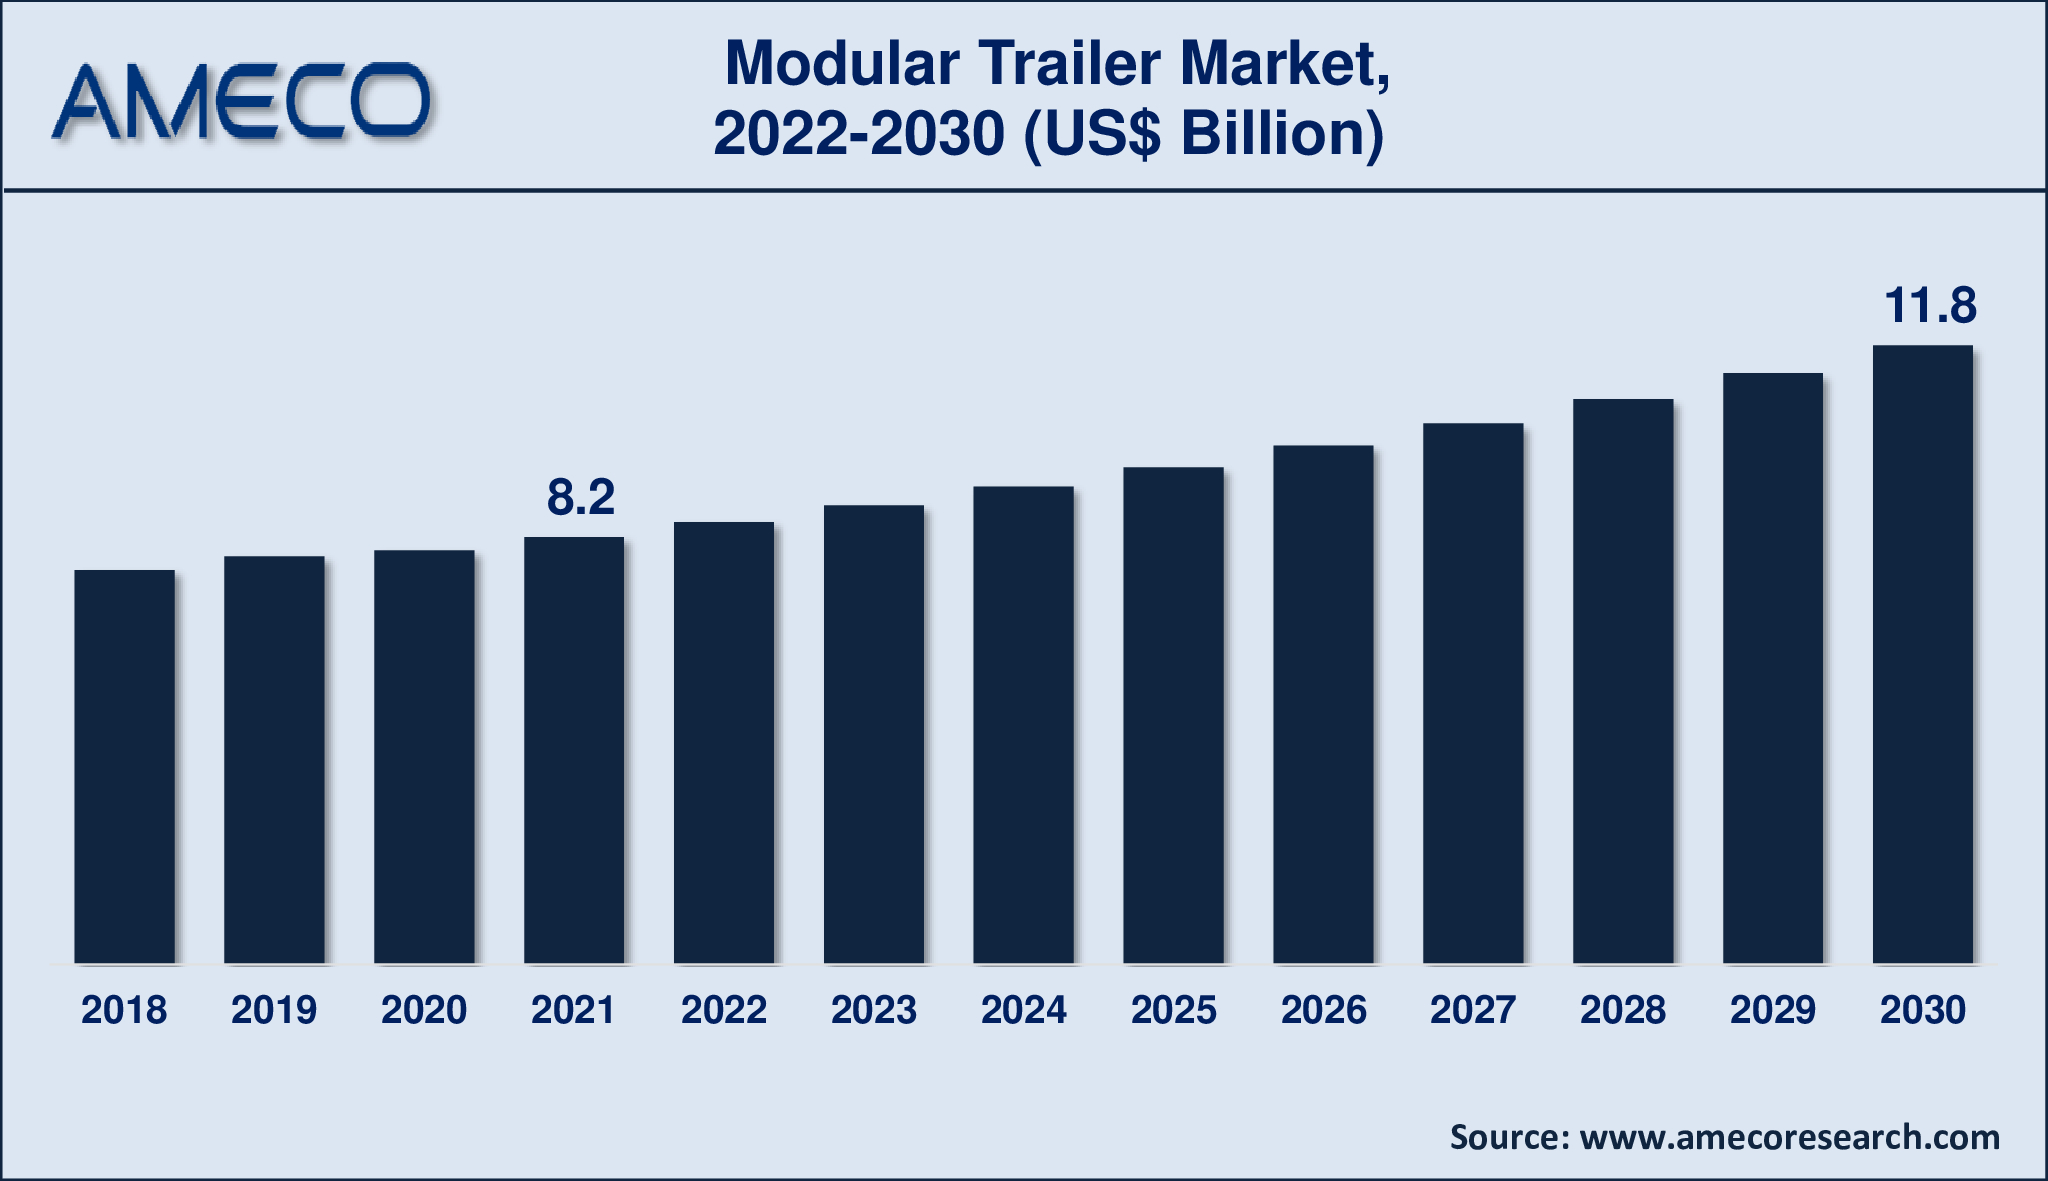 Modular Trailer Market Growth